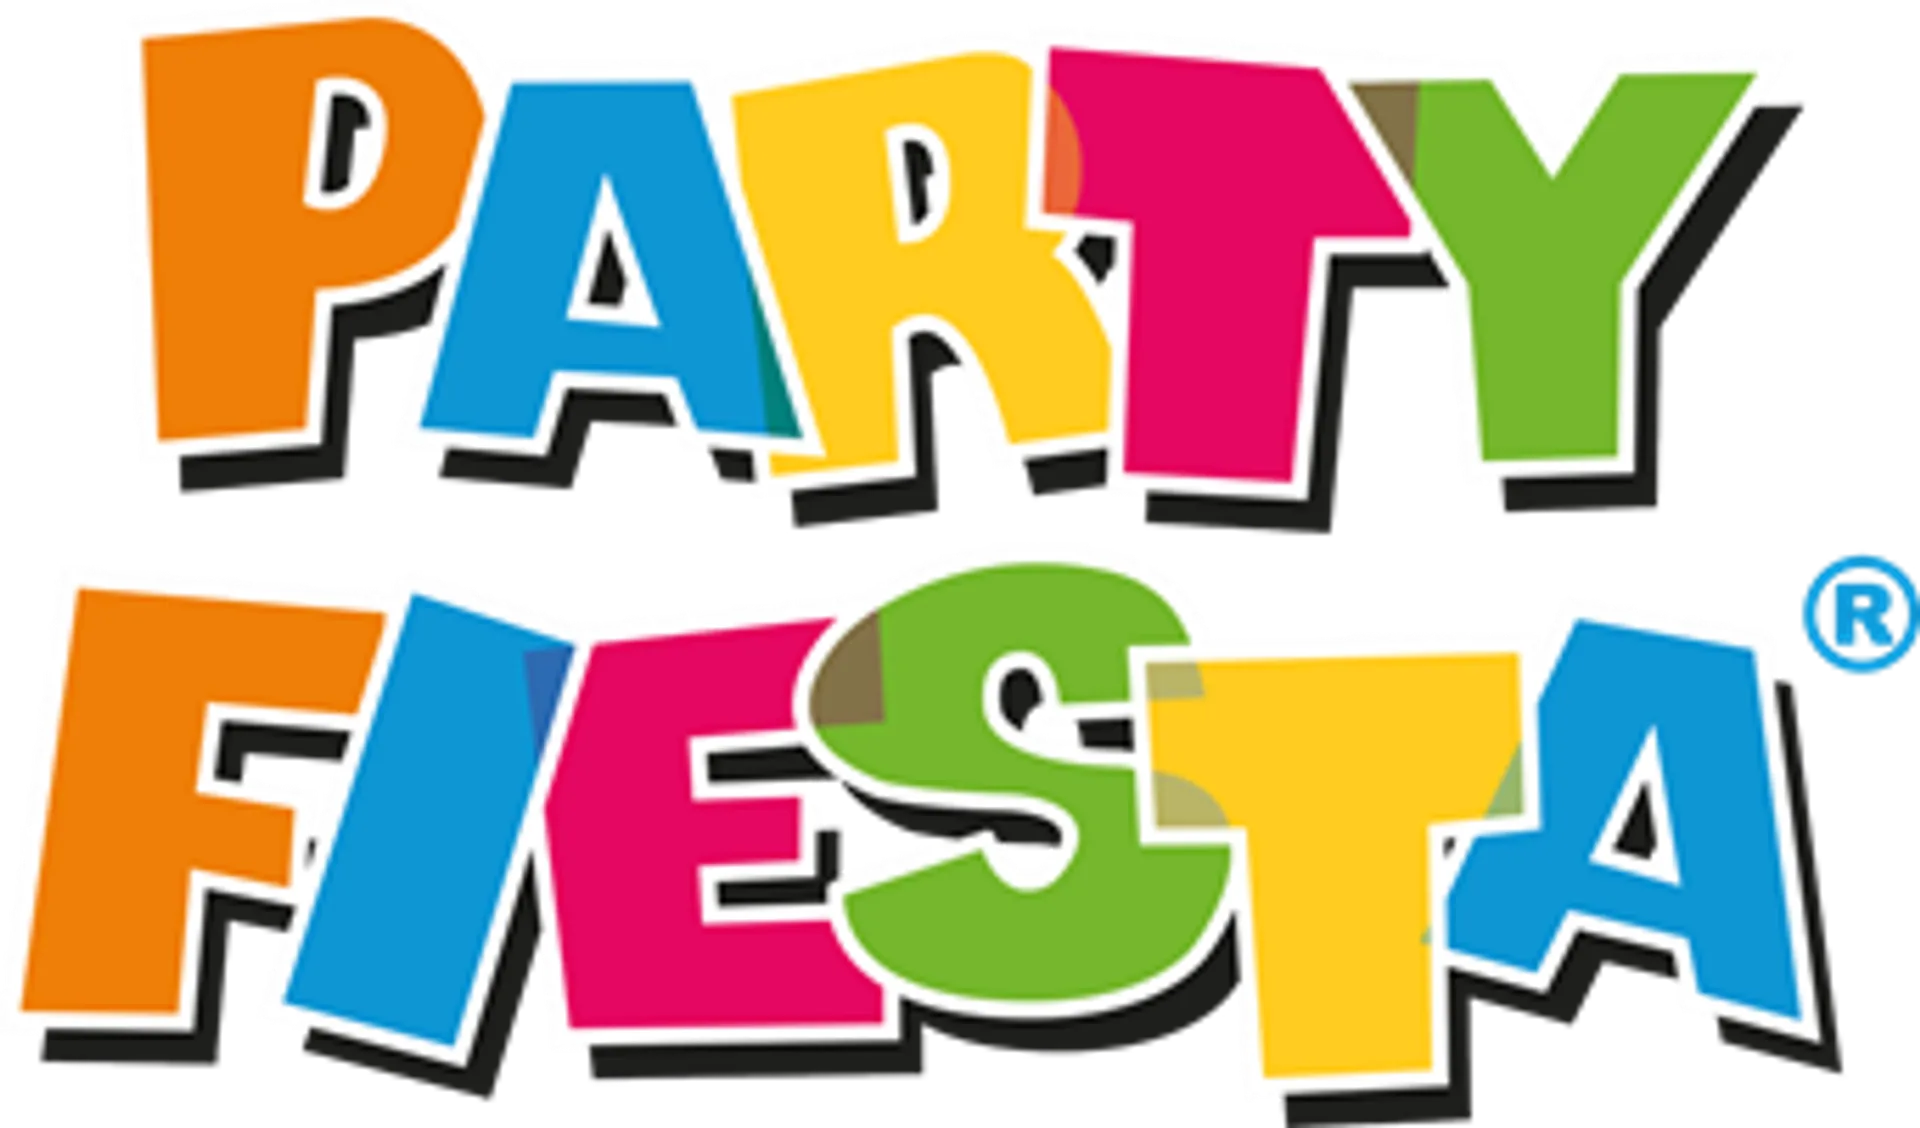 PARTY FIESTA logo